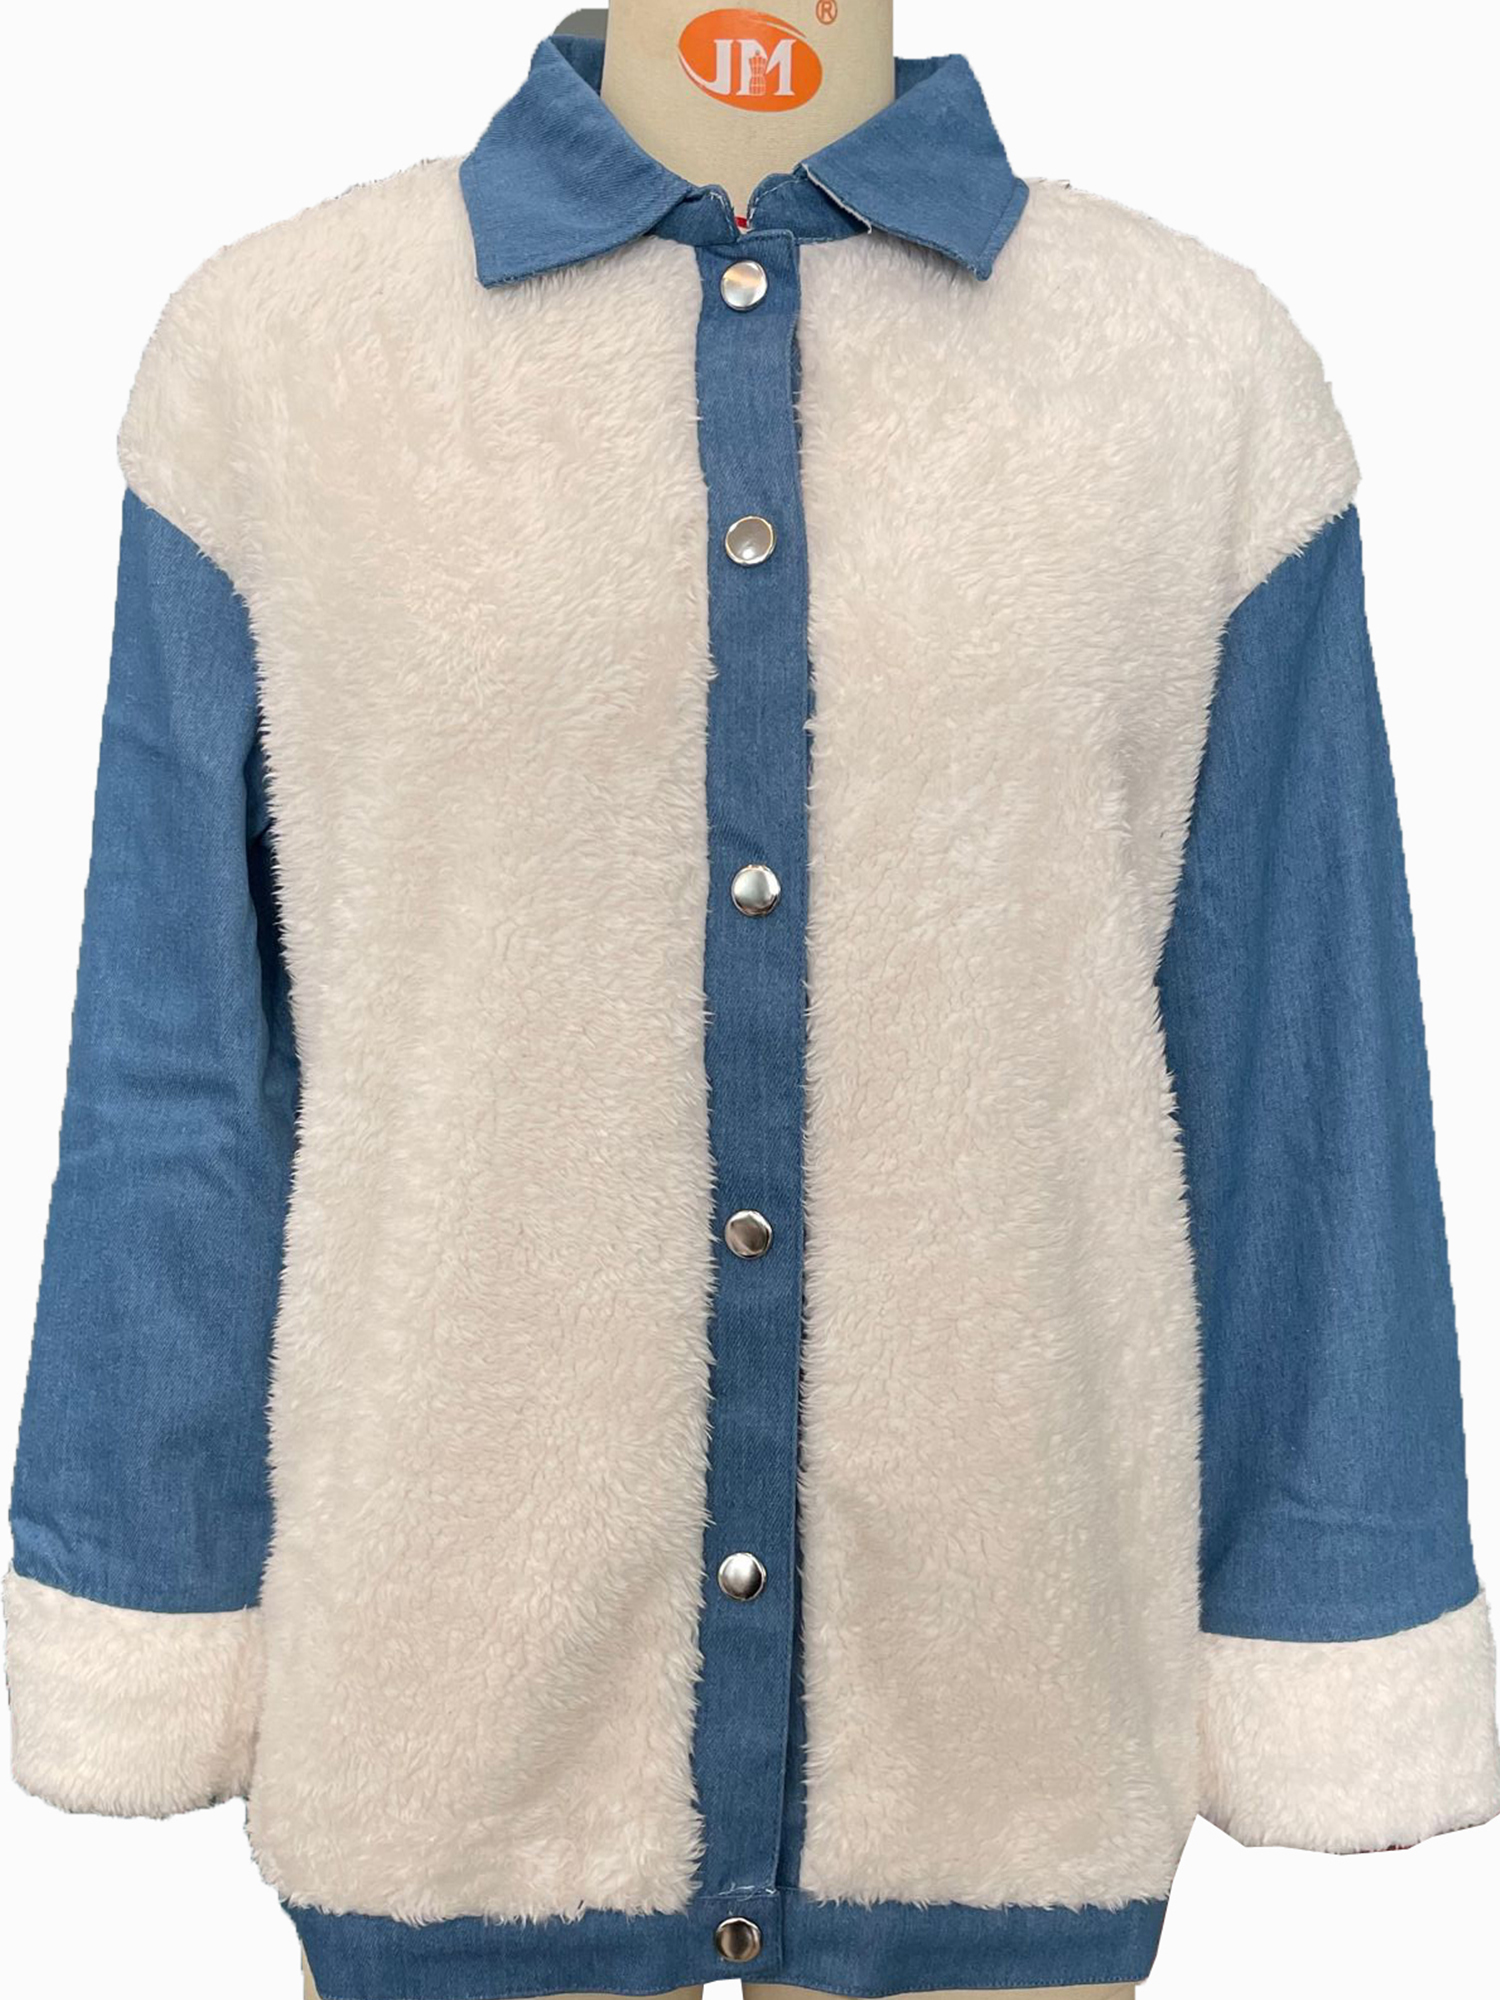 Pudcoco Women Plush Denim Jacket Winter Long Sleeve Patchwork Outerwear - image 2 of 5